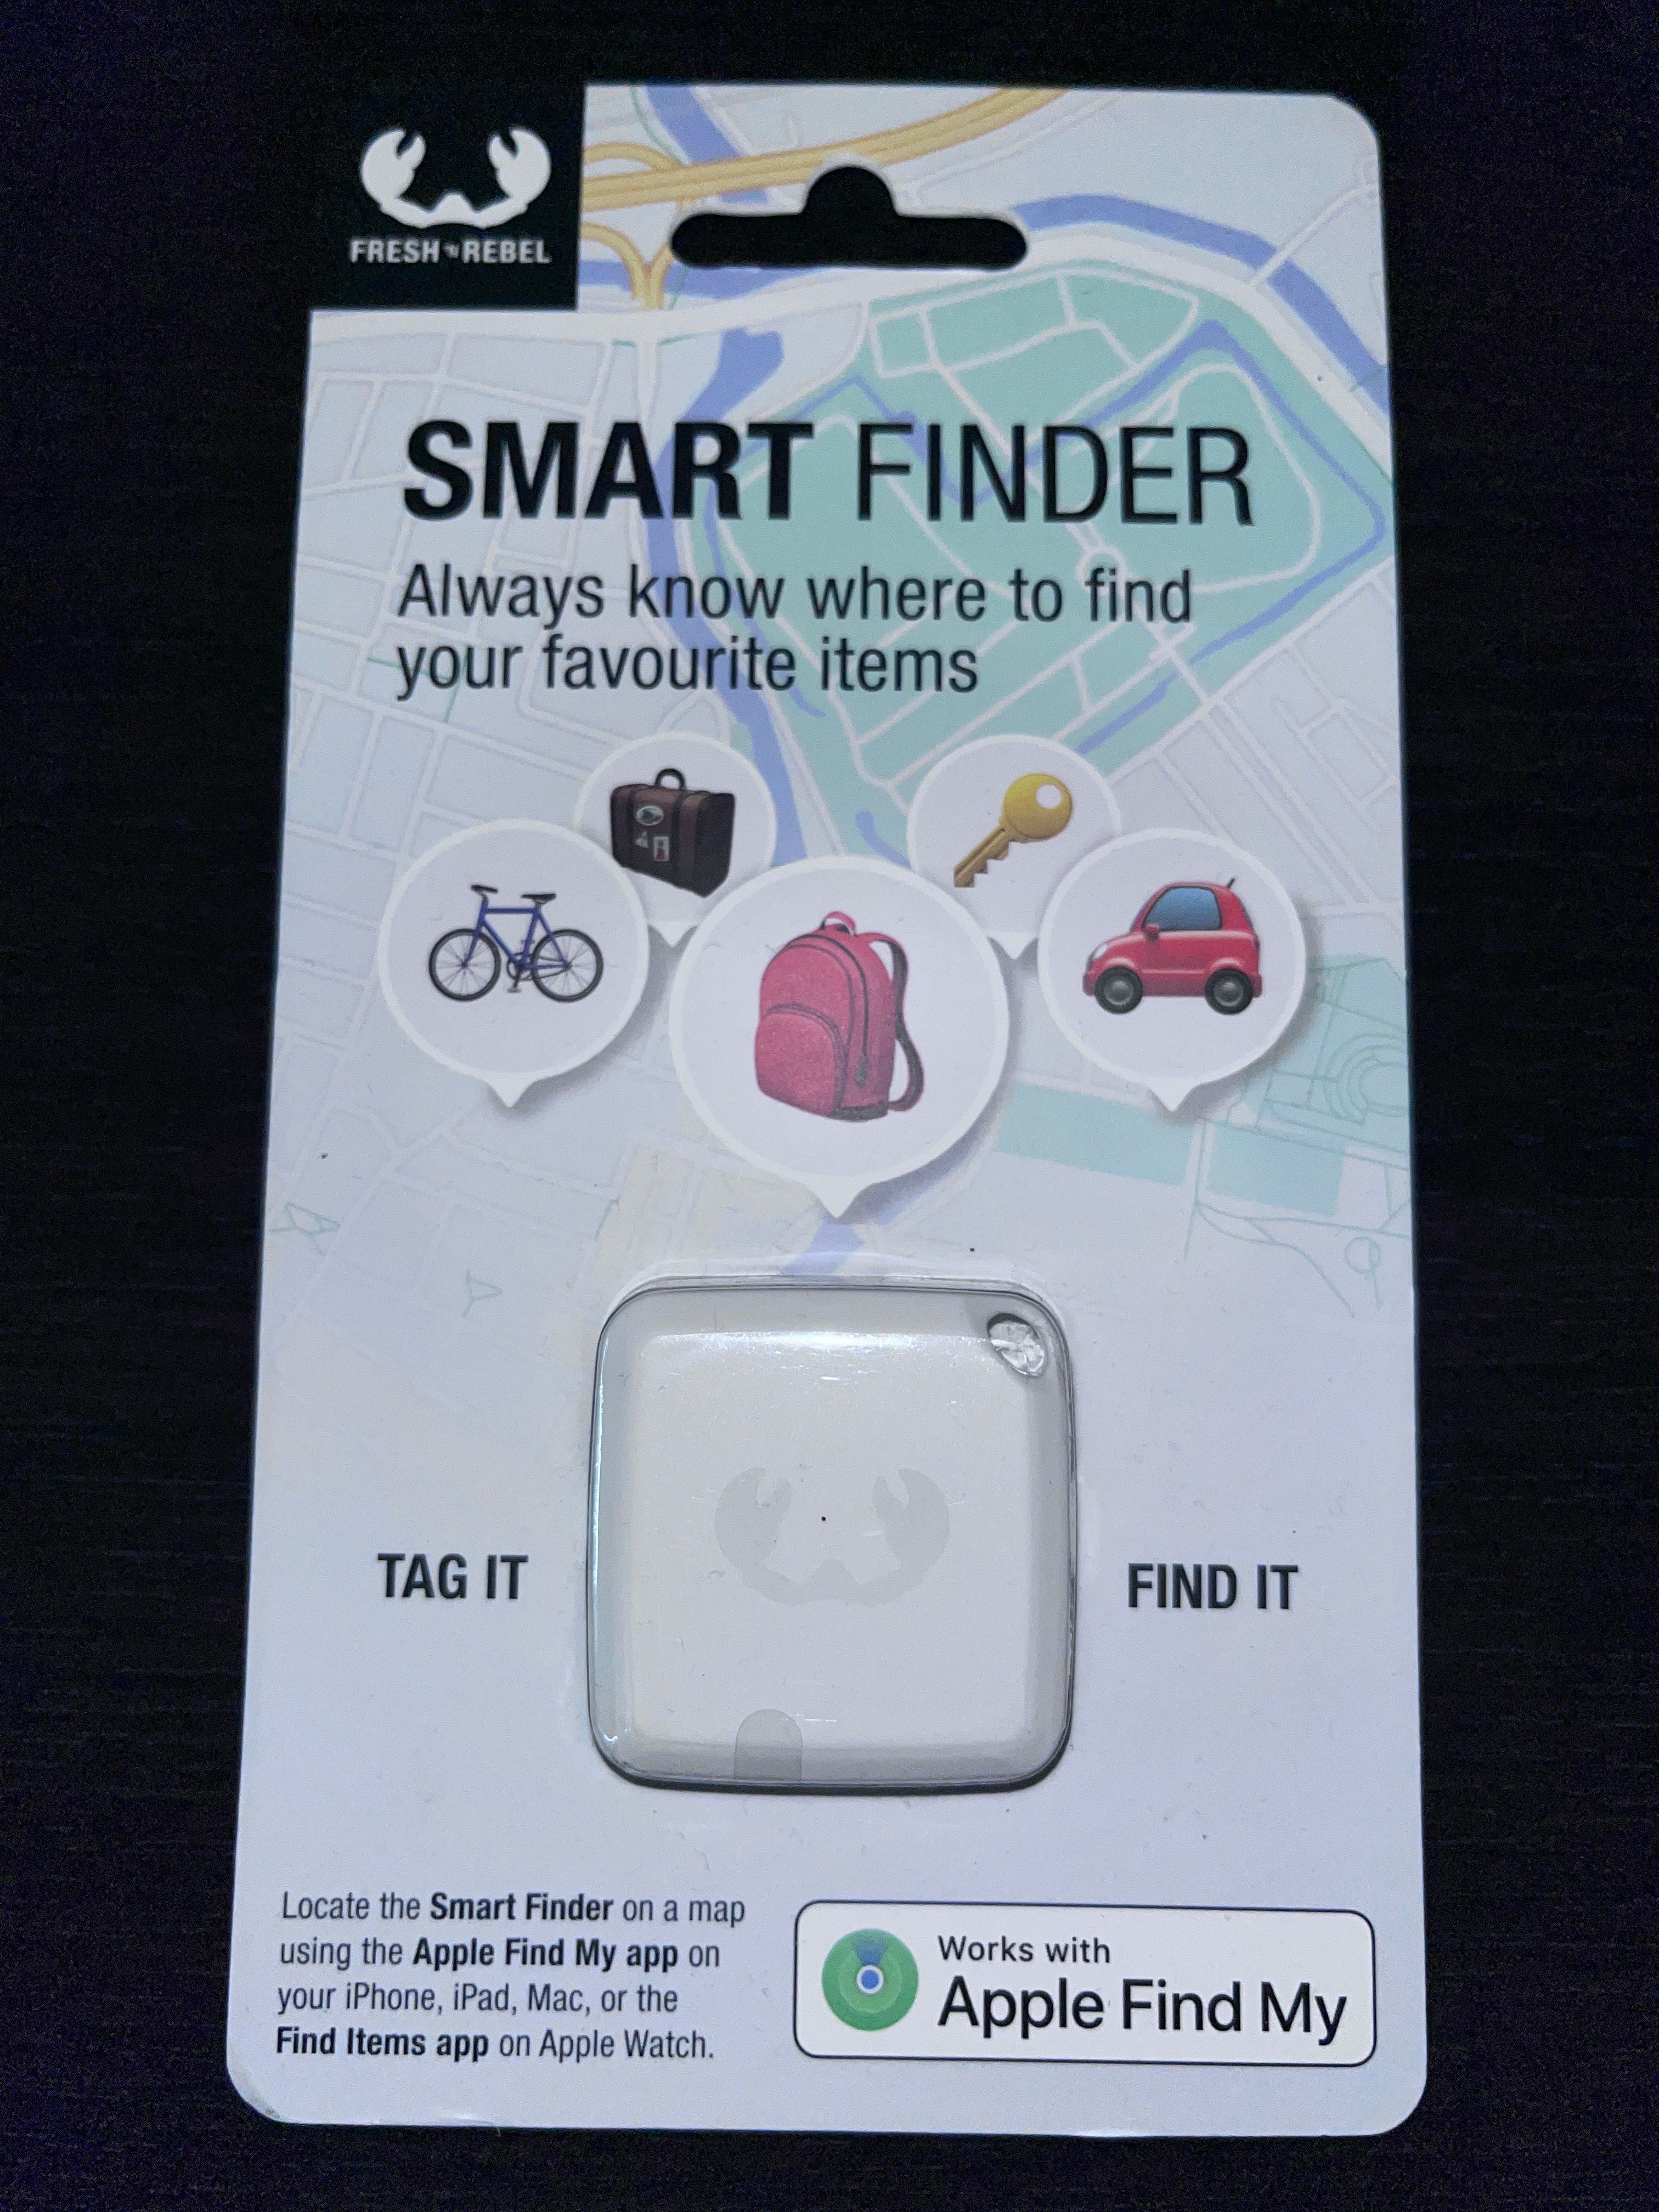 Smart Finder "Air tag"